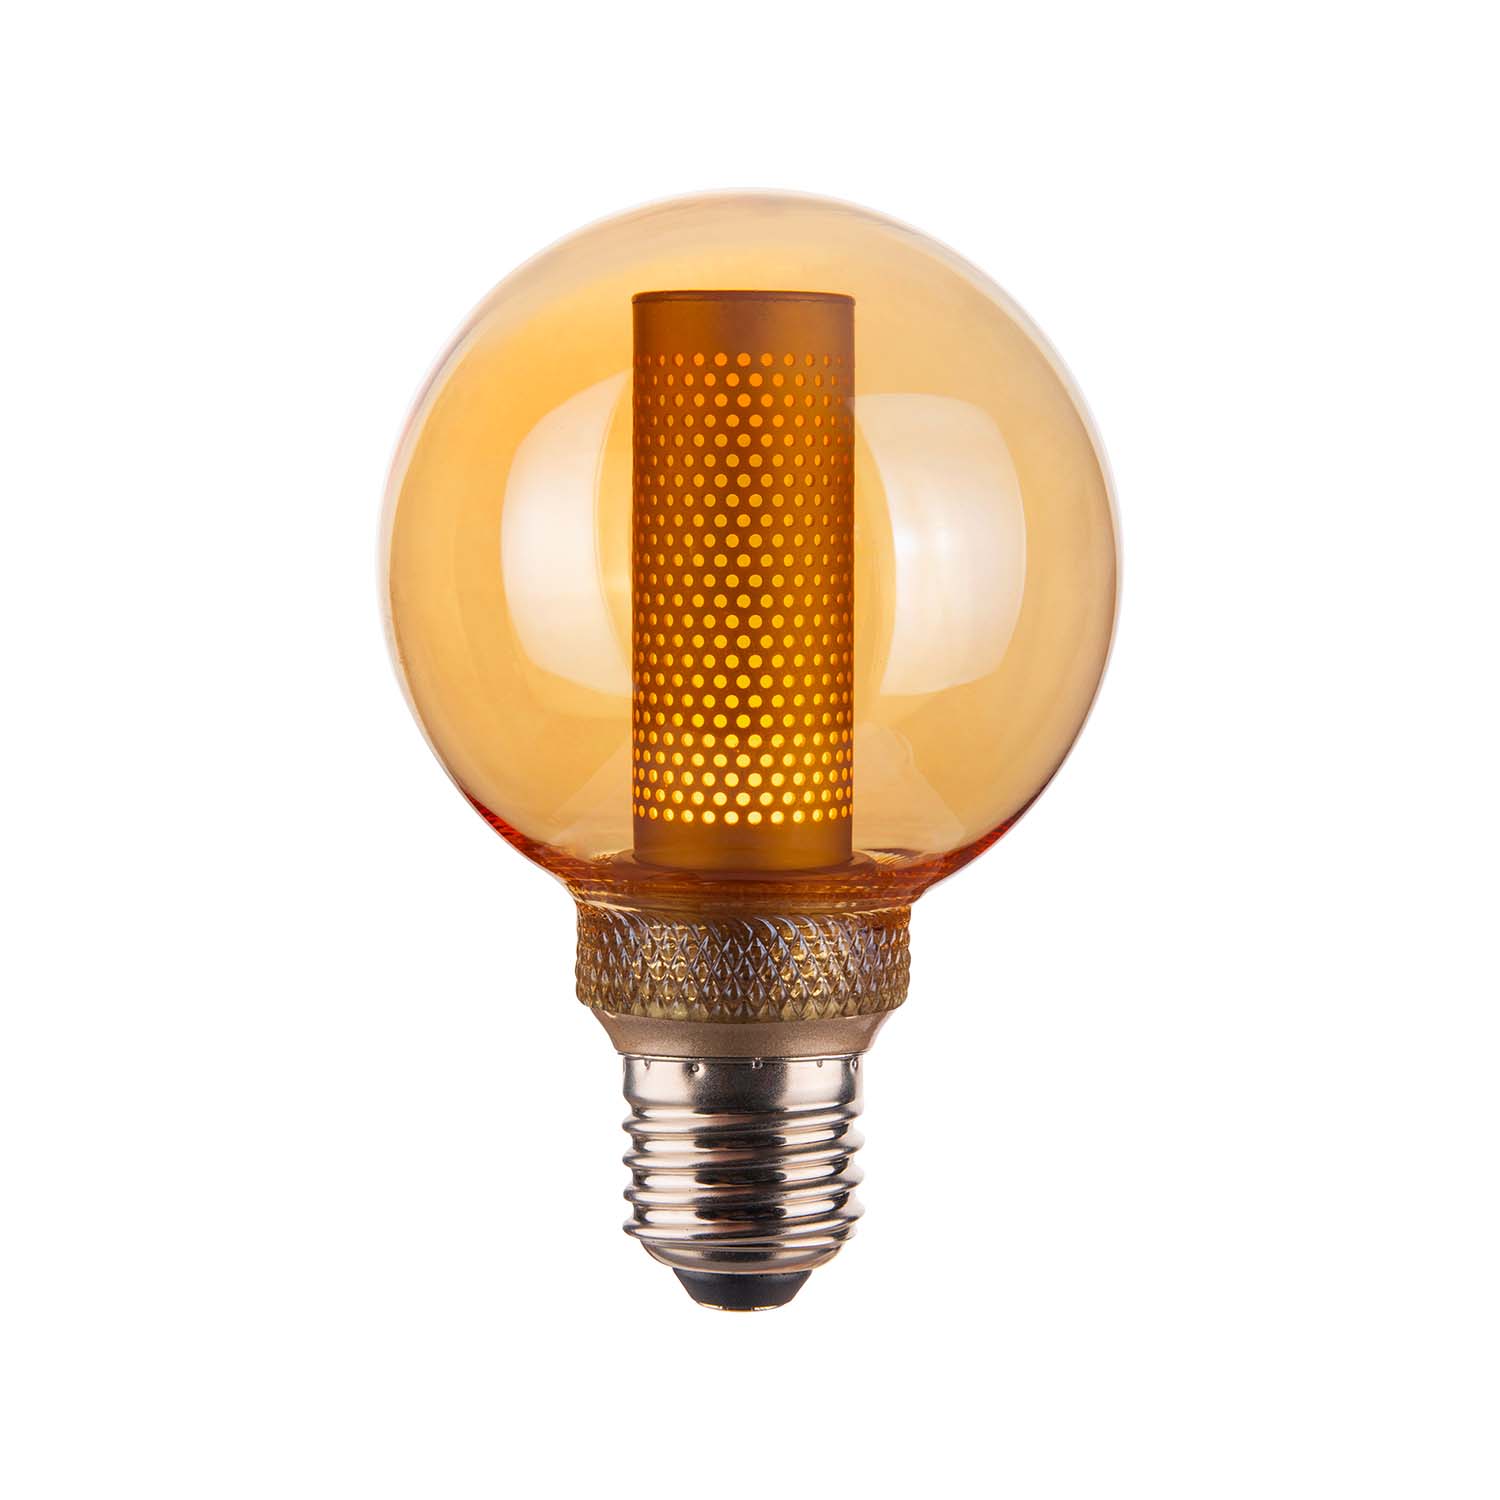 Core - E27 LED bulb with perforated tube